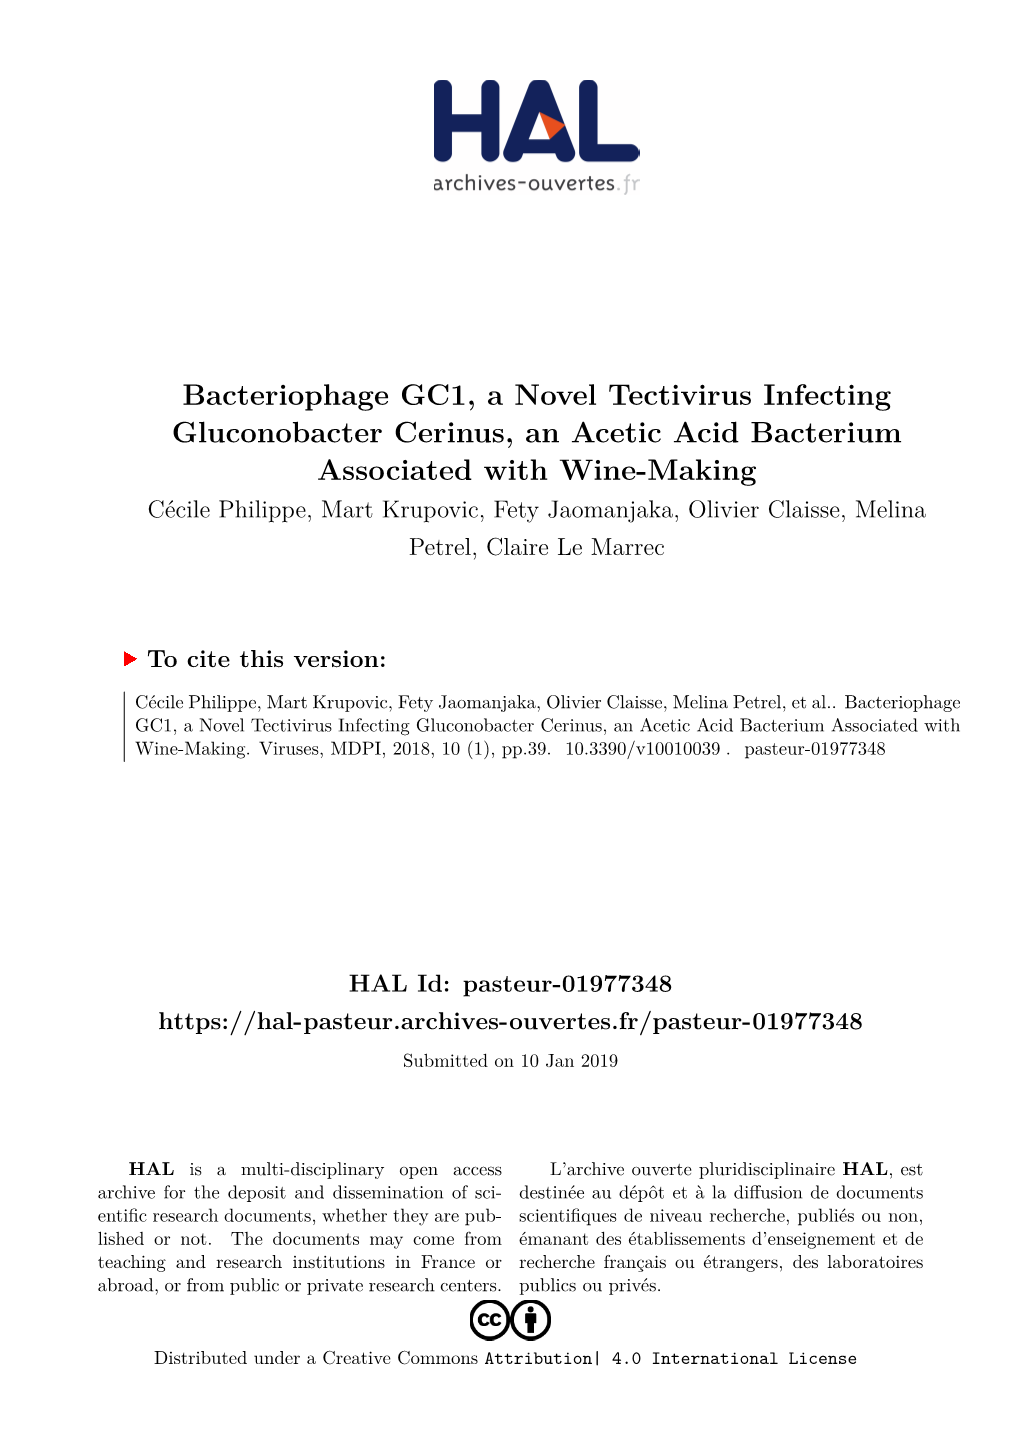 Bacteriophage GC1, a Novel Tectivirus Infecting Gluconobacter